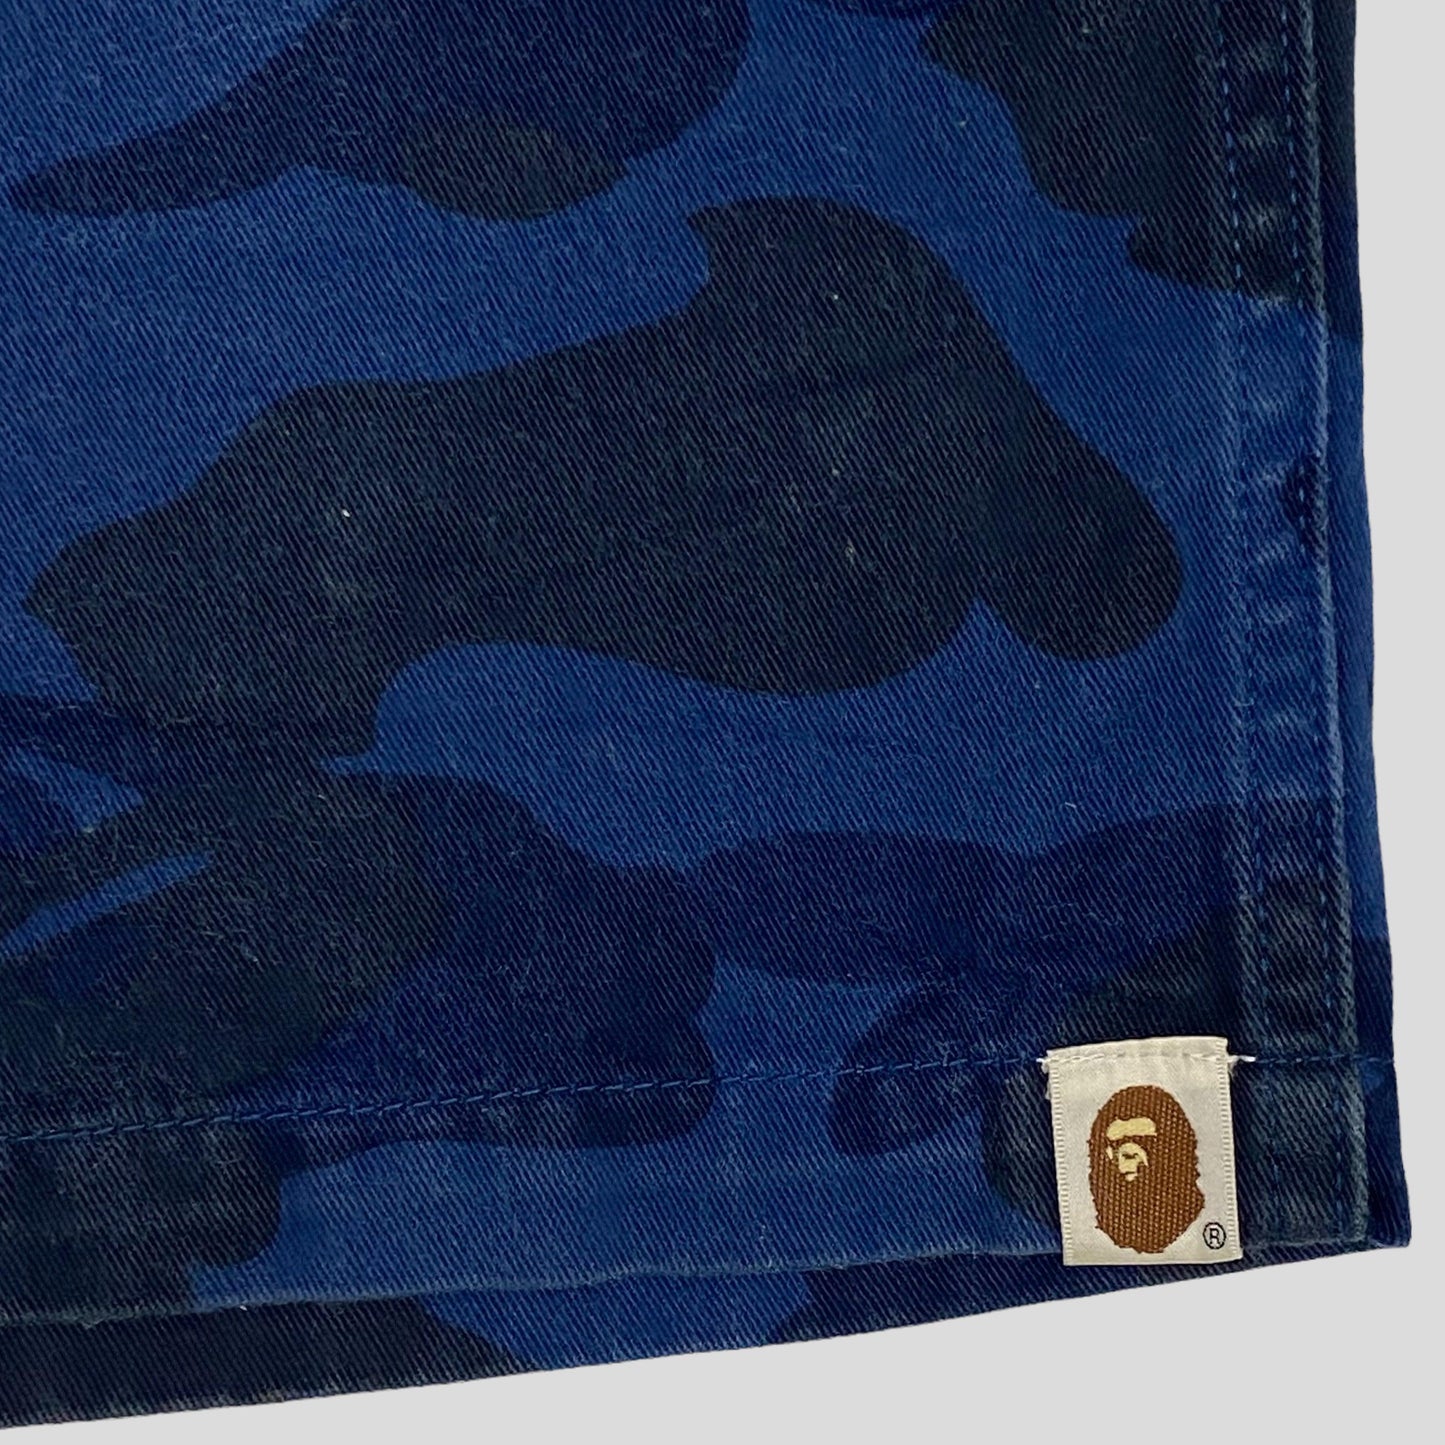 Bape 00’s Blue Camo Shorts - W30 - Known Source